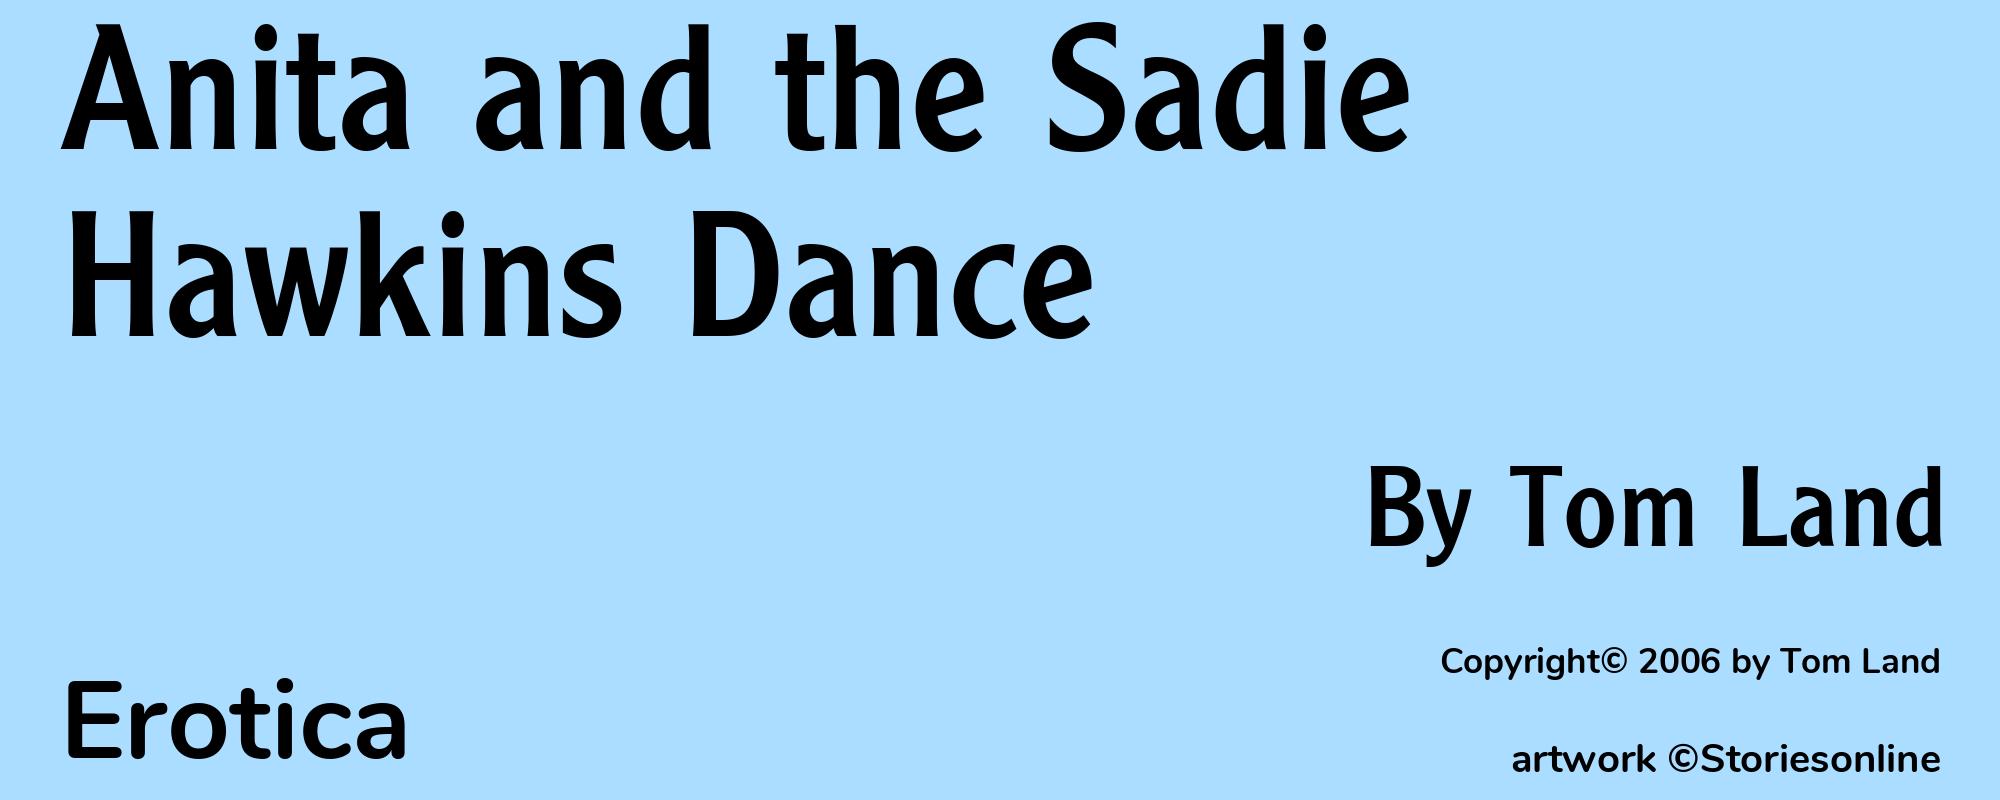 Anita and the Sadie Hawkins Dance - Cover